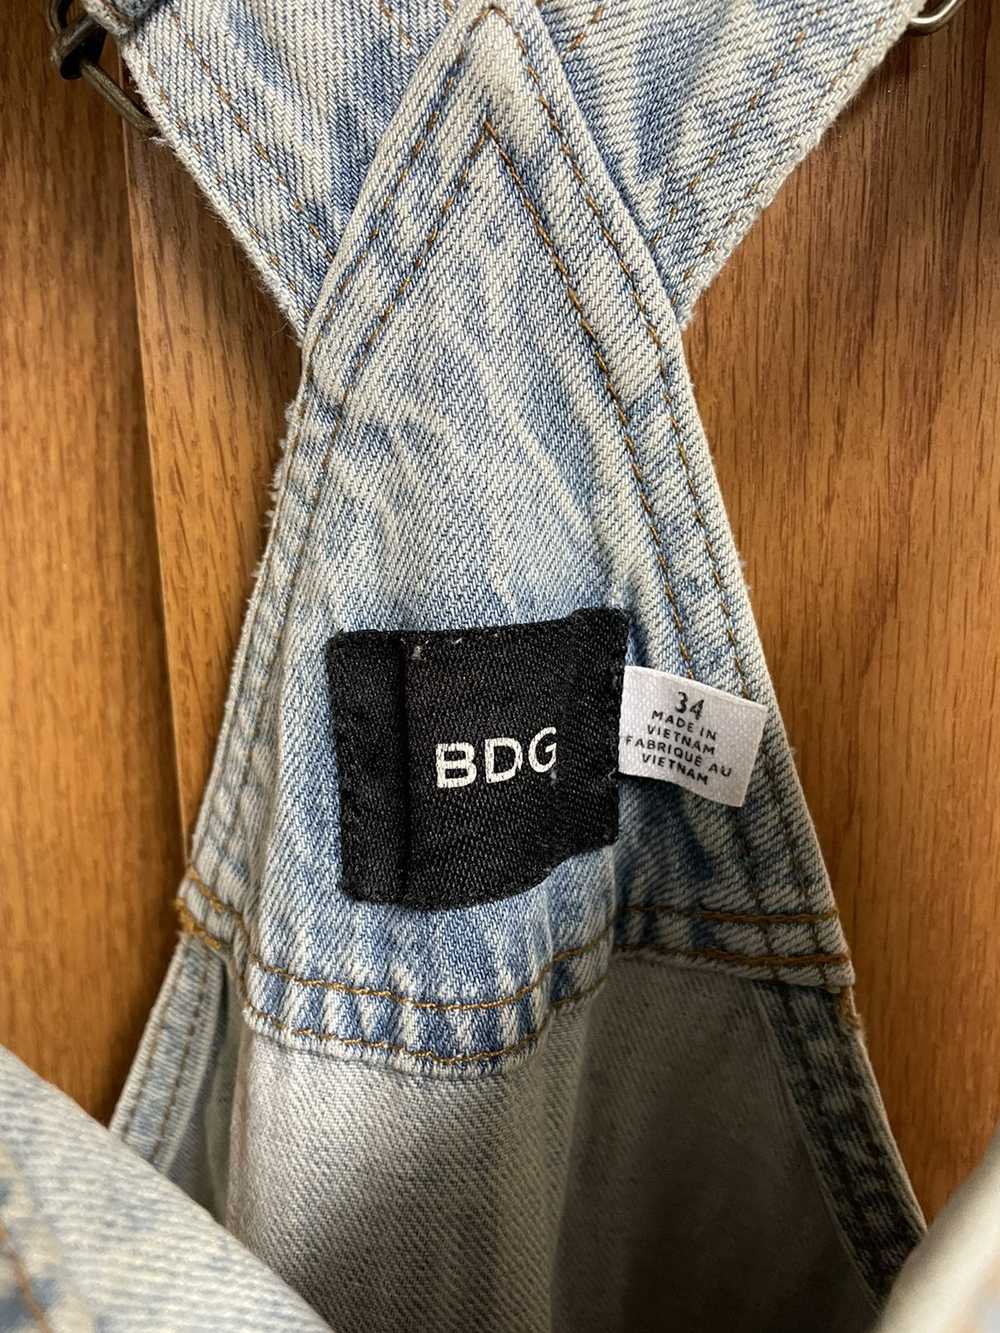 Bdg BDG Denim Overalls - image 3